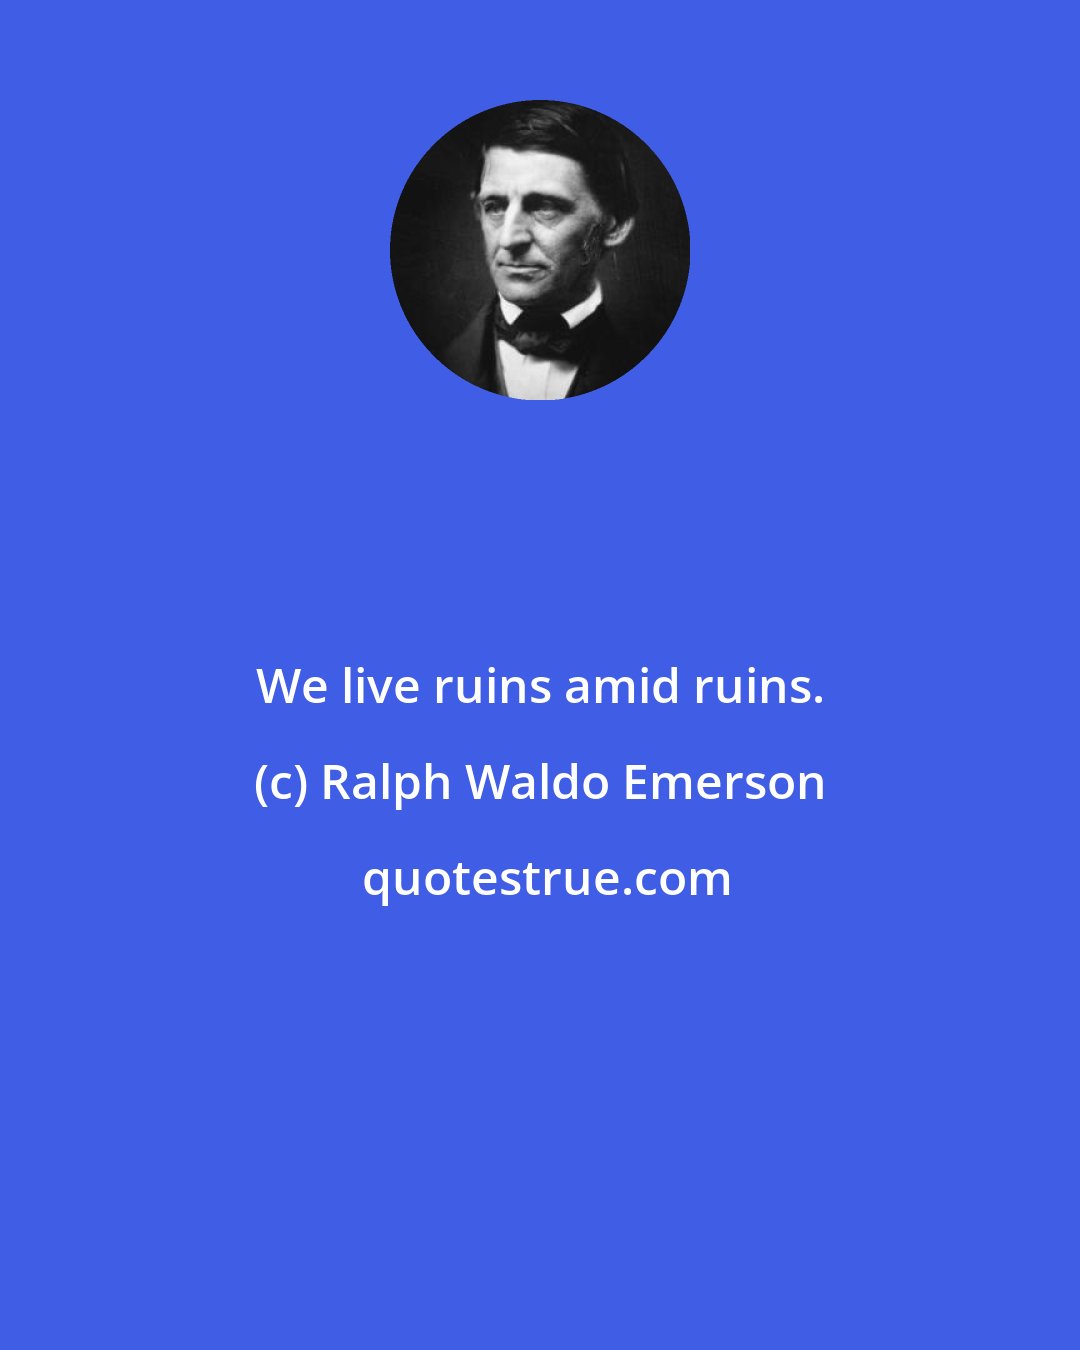 Ralph Waldo Emerson: We live ruins amid ruins.